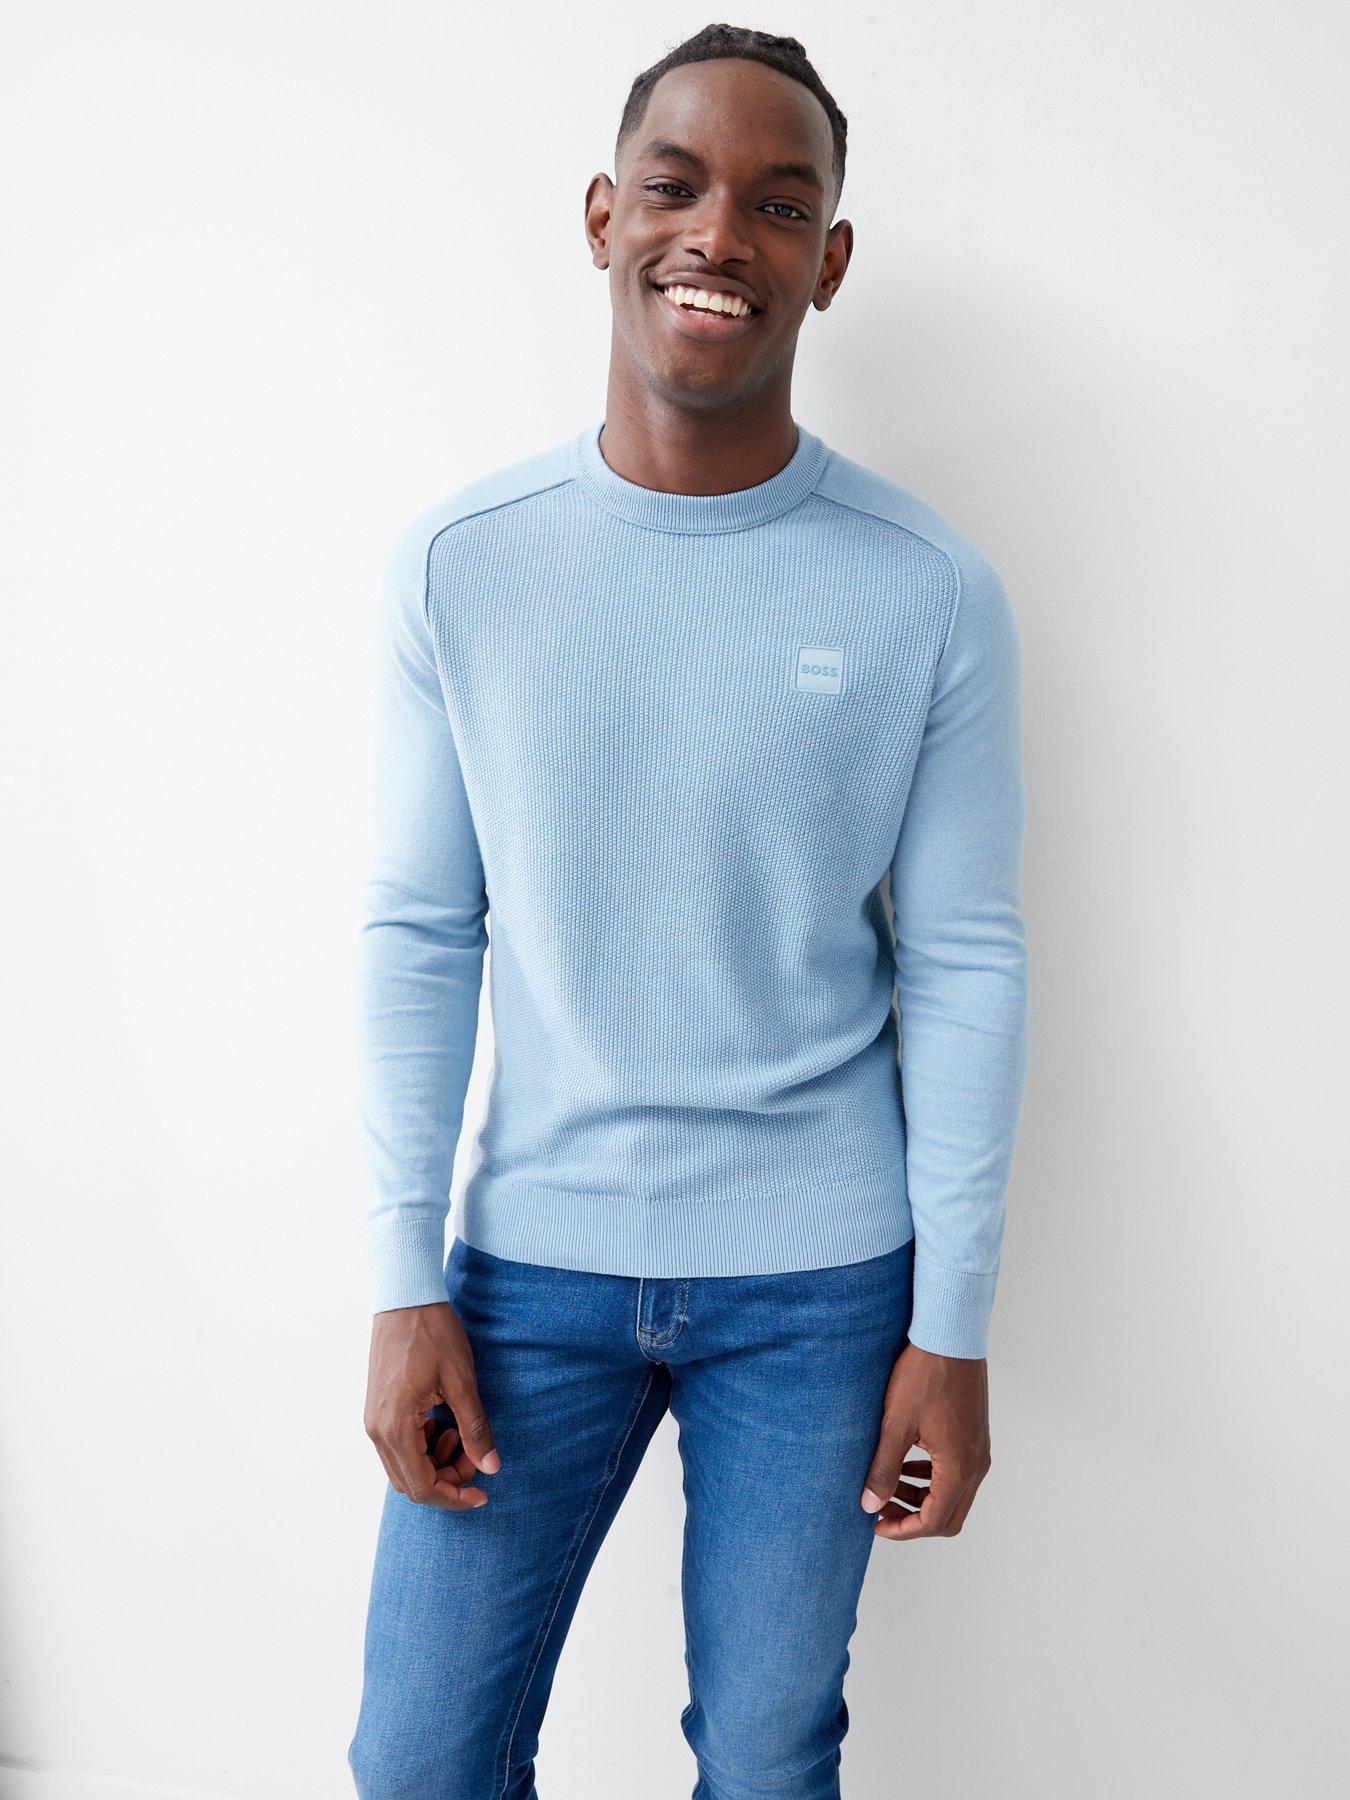 discount 87% Zara jumper KIDS FASHION Jumpers & Sweatshirts Knitted Navy Blue 7Y 